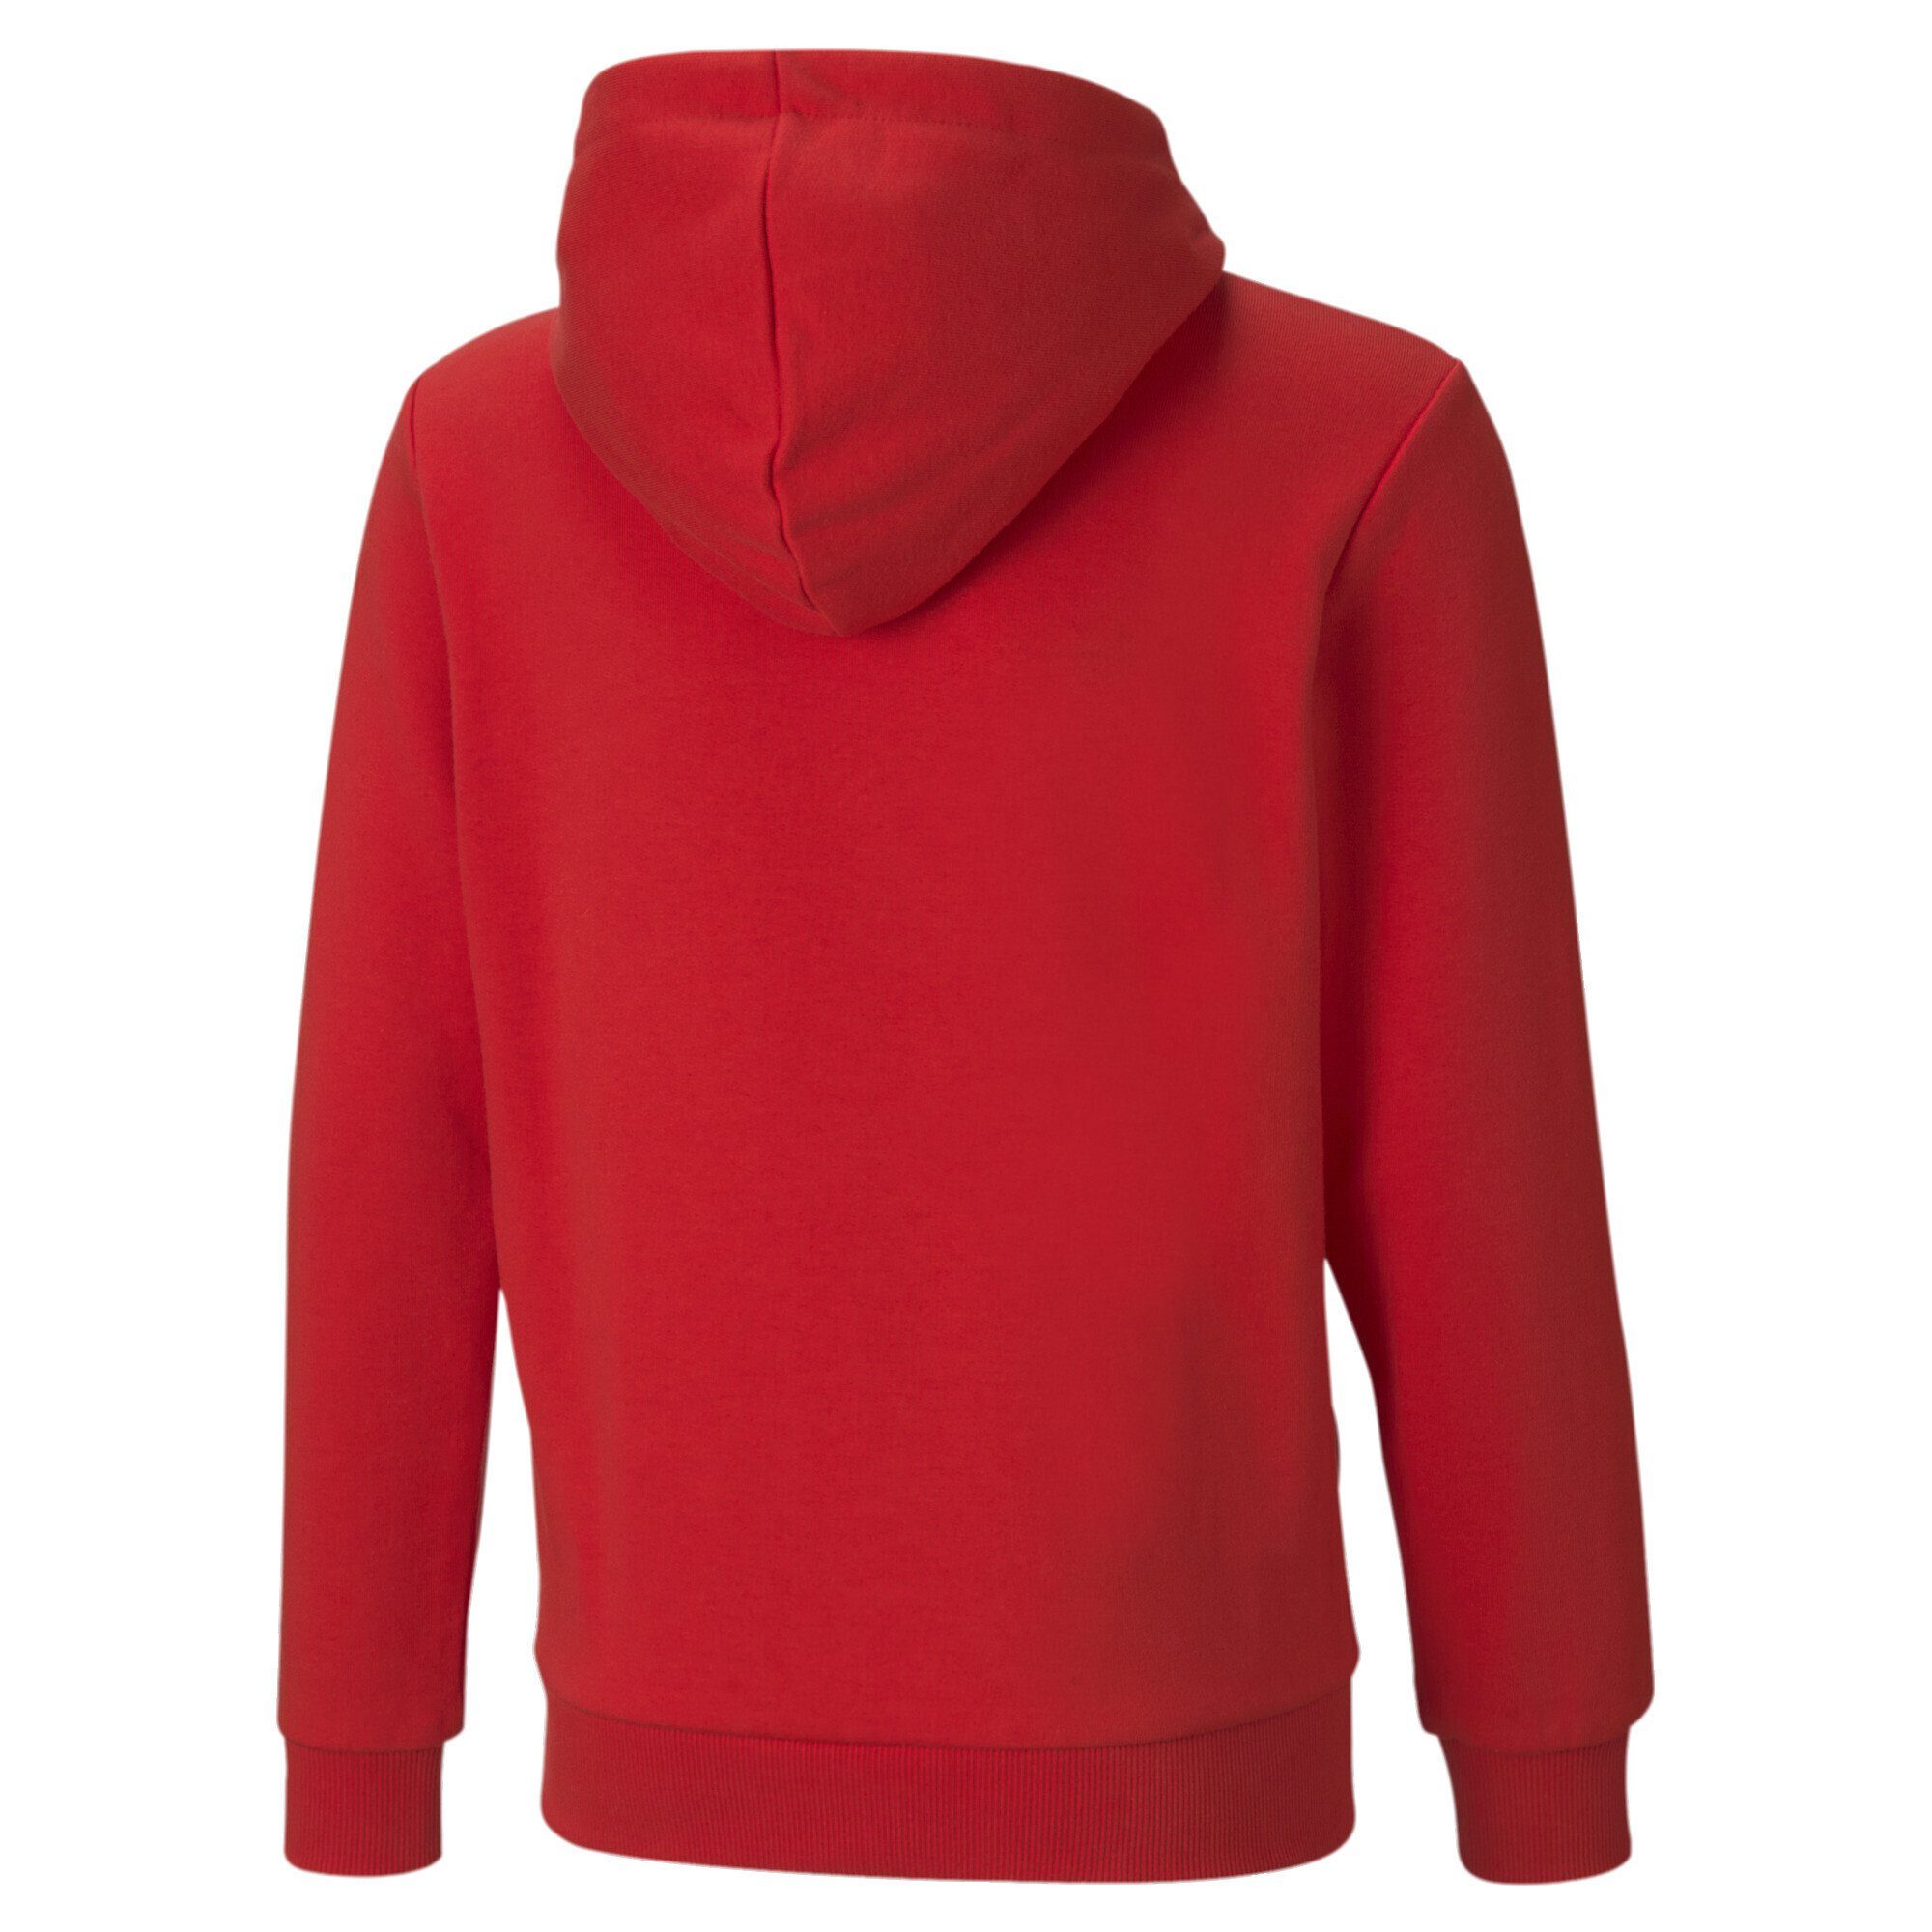 Risk Classics Hoodie Jungen PUMA High Sweatshirt Red Logo